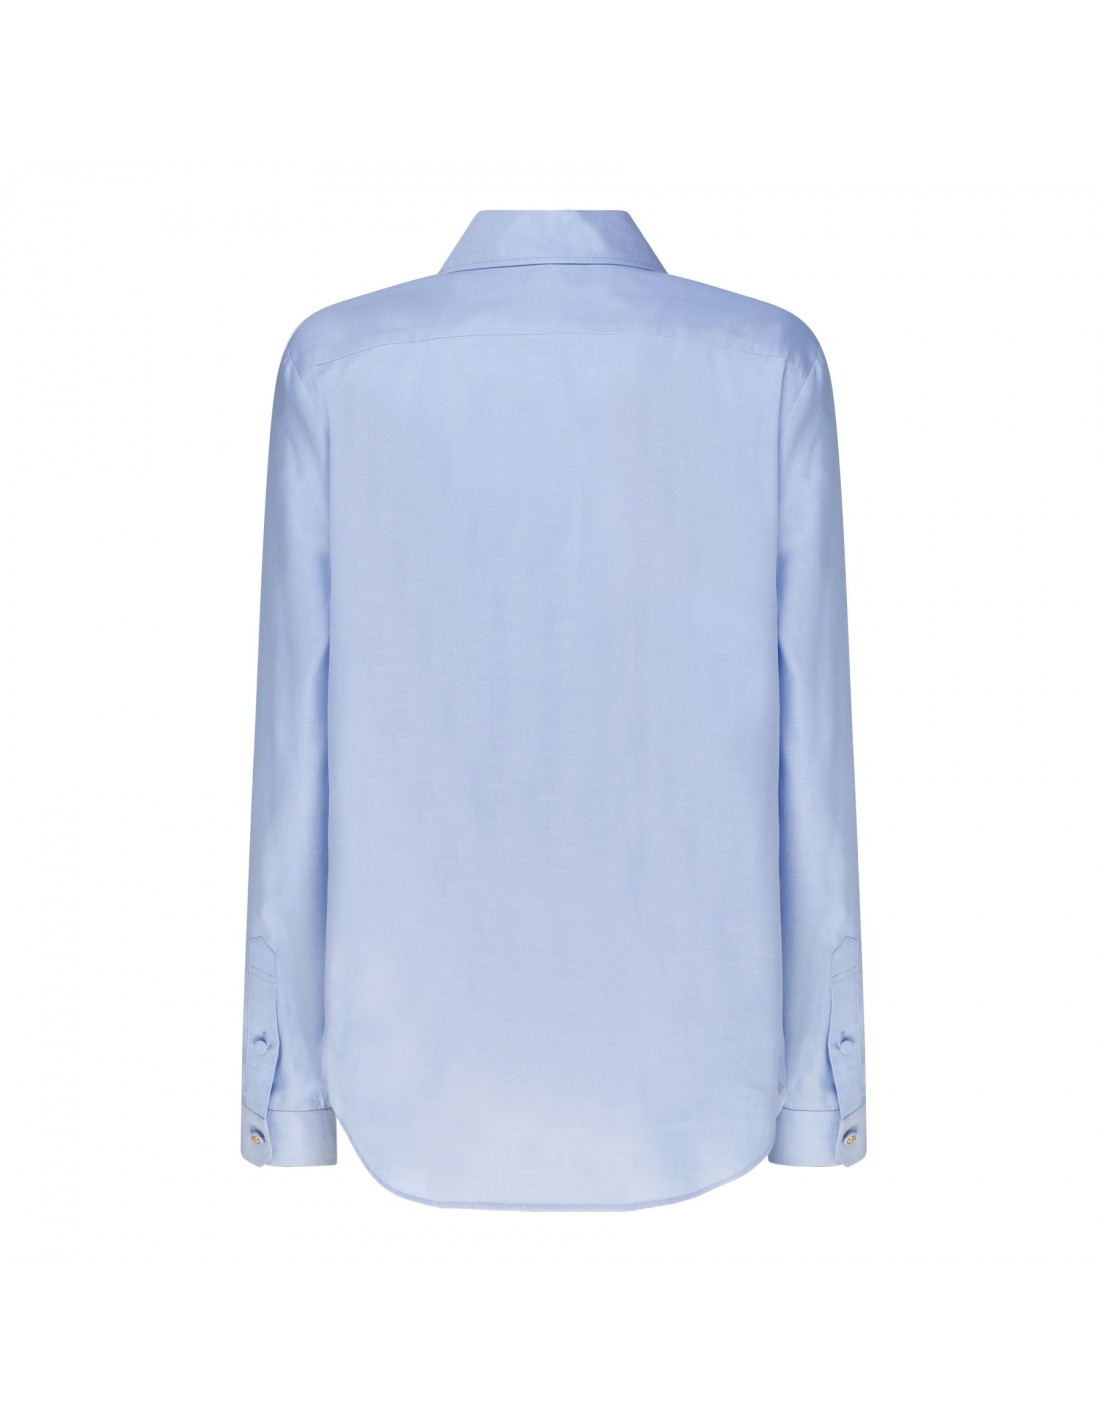 Blue cotton Oxford shirt